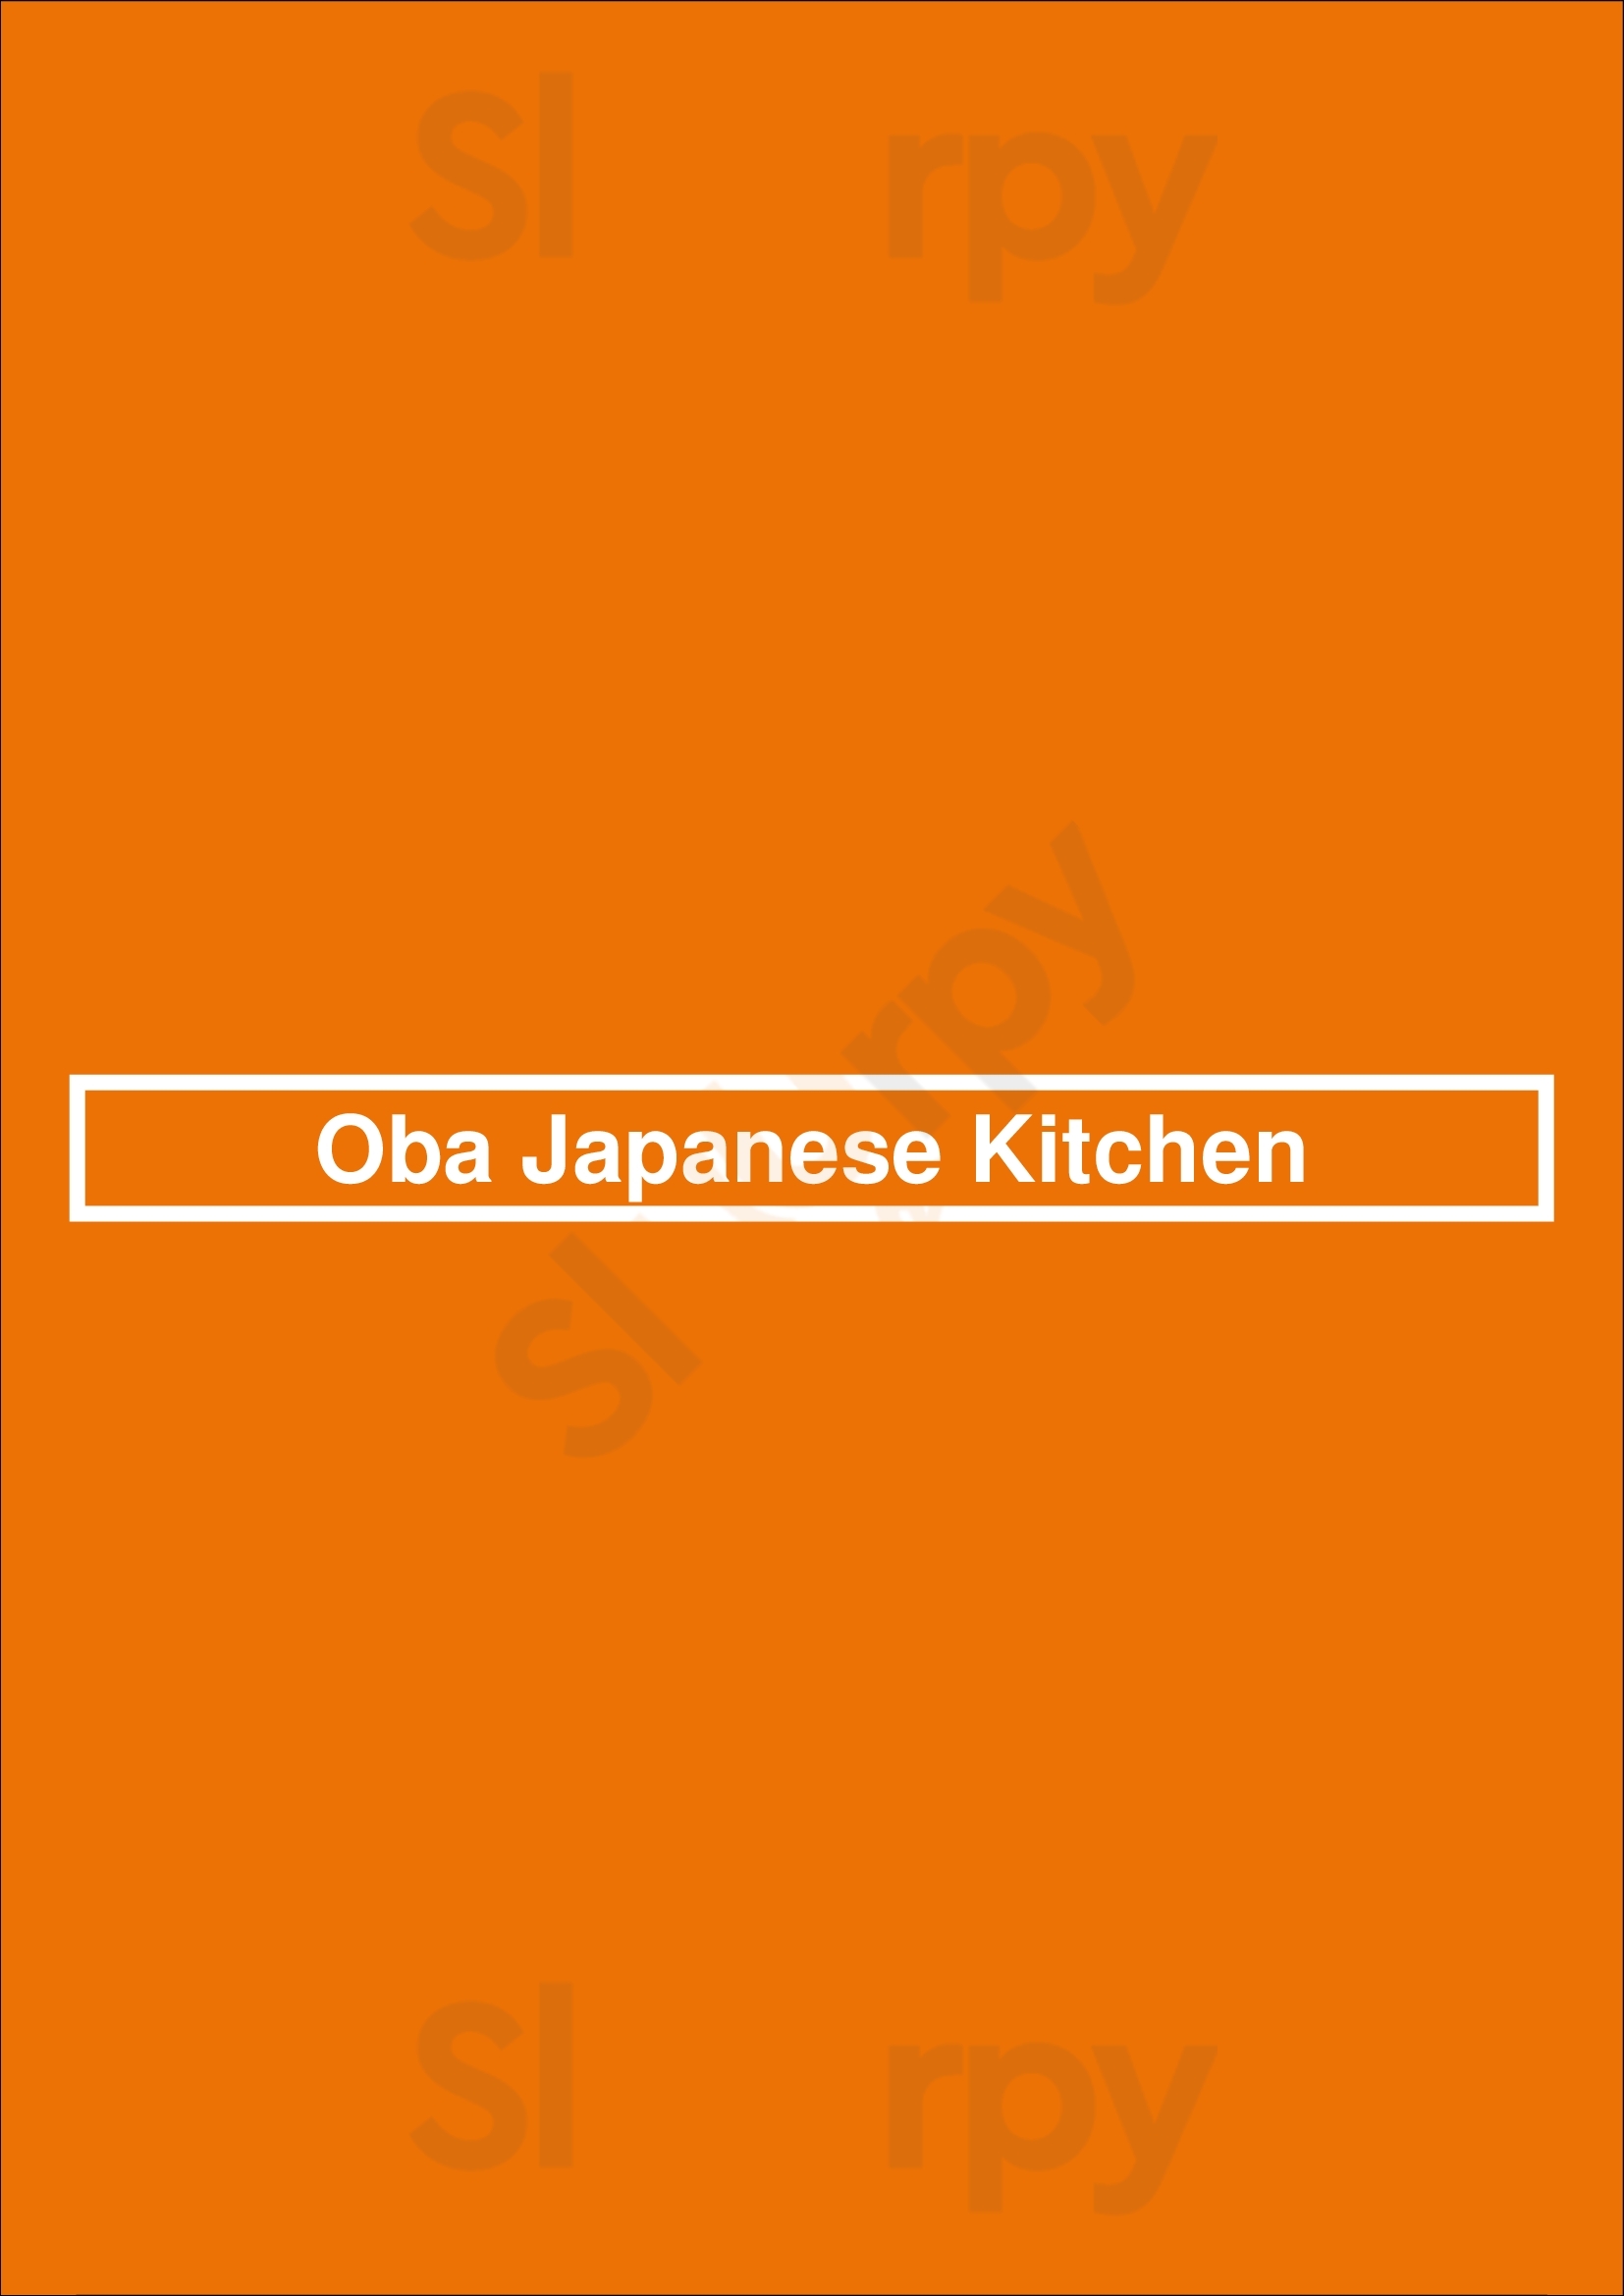 Oba Japanese Kitchen Sacramento Menu - 1